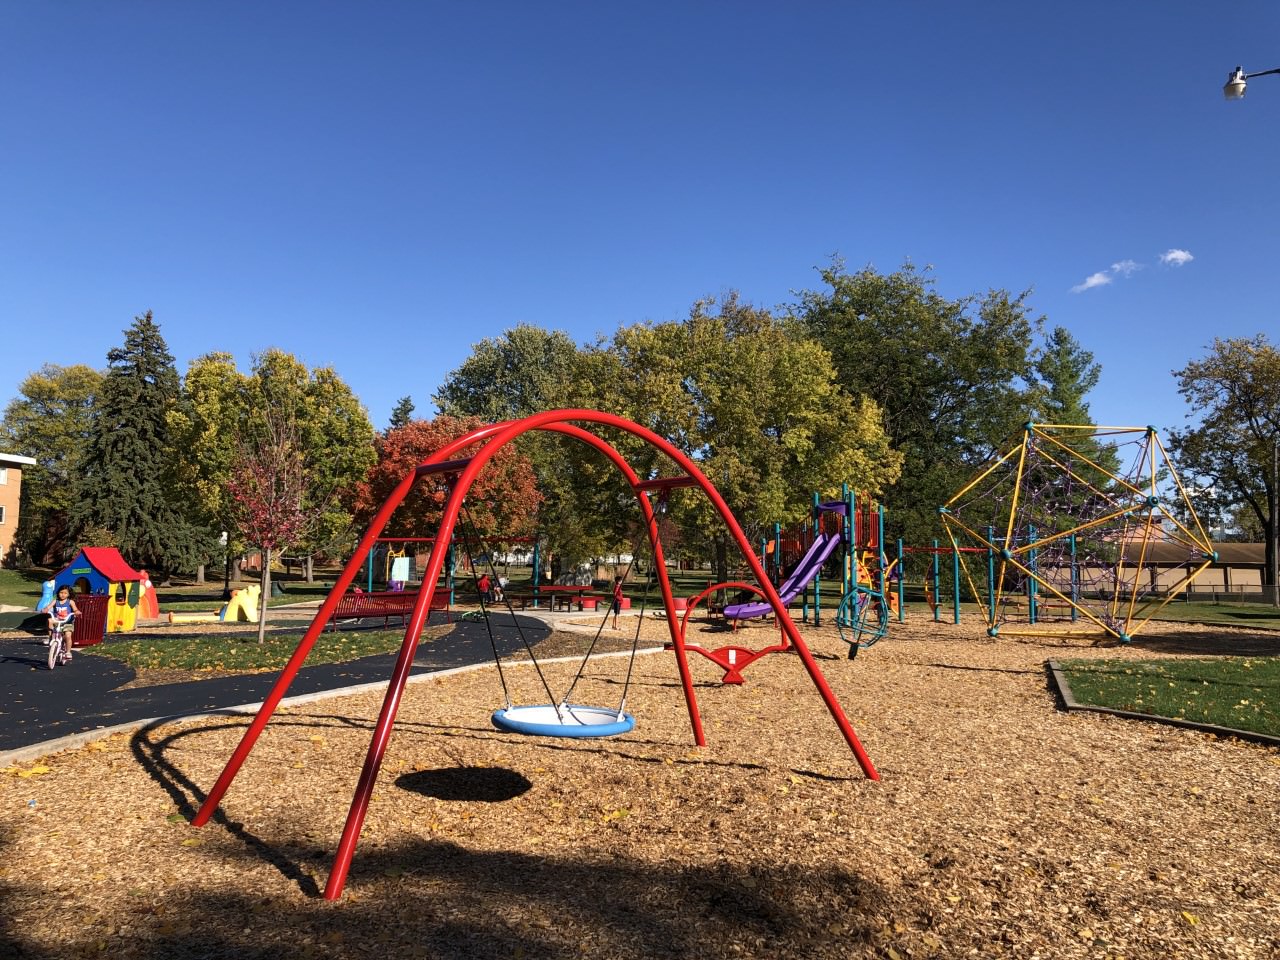 Minnesota Municipal Playground at Western Sculpture Park in St Paul, MN